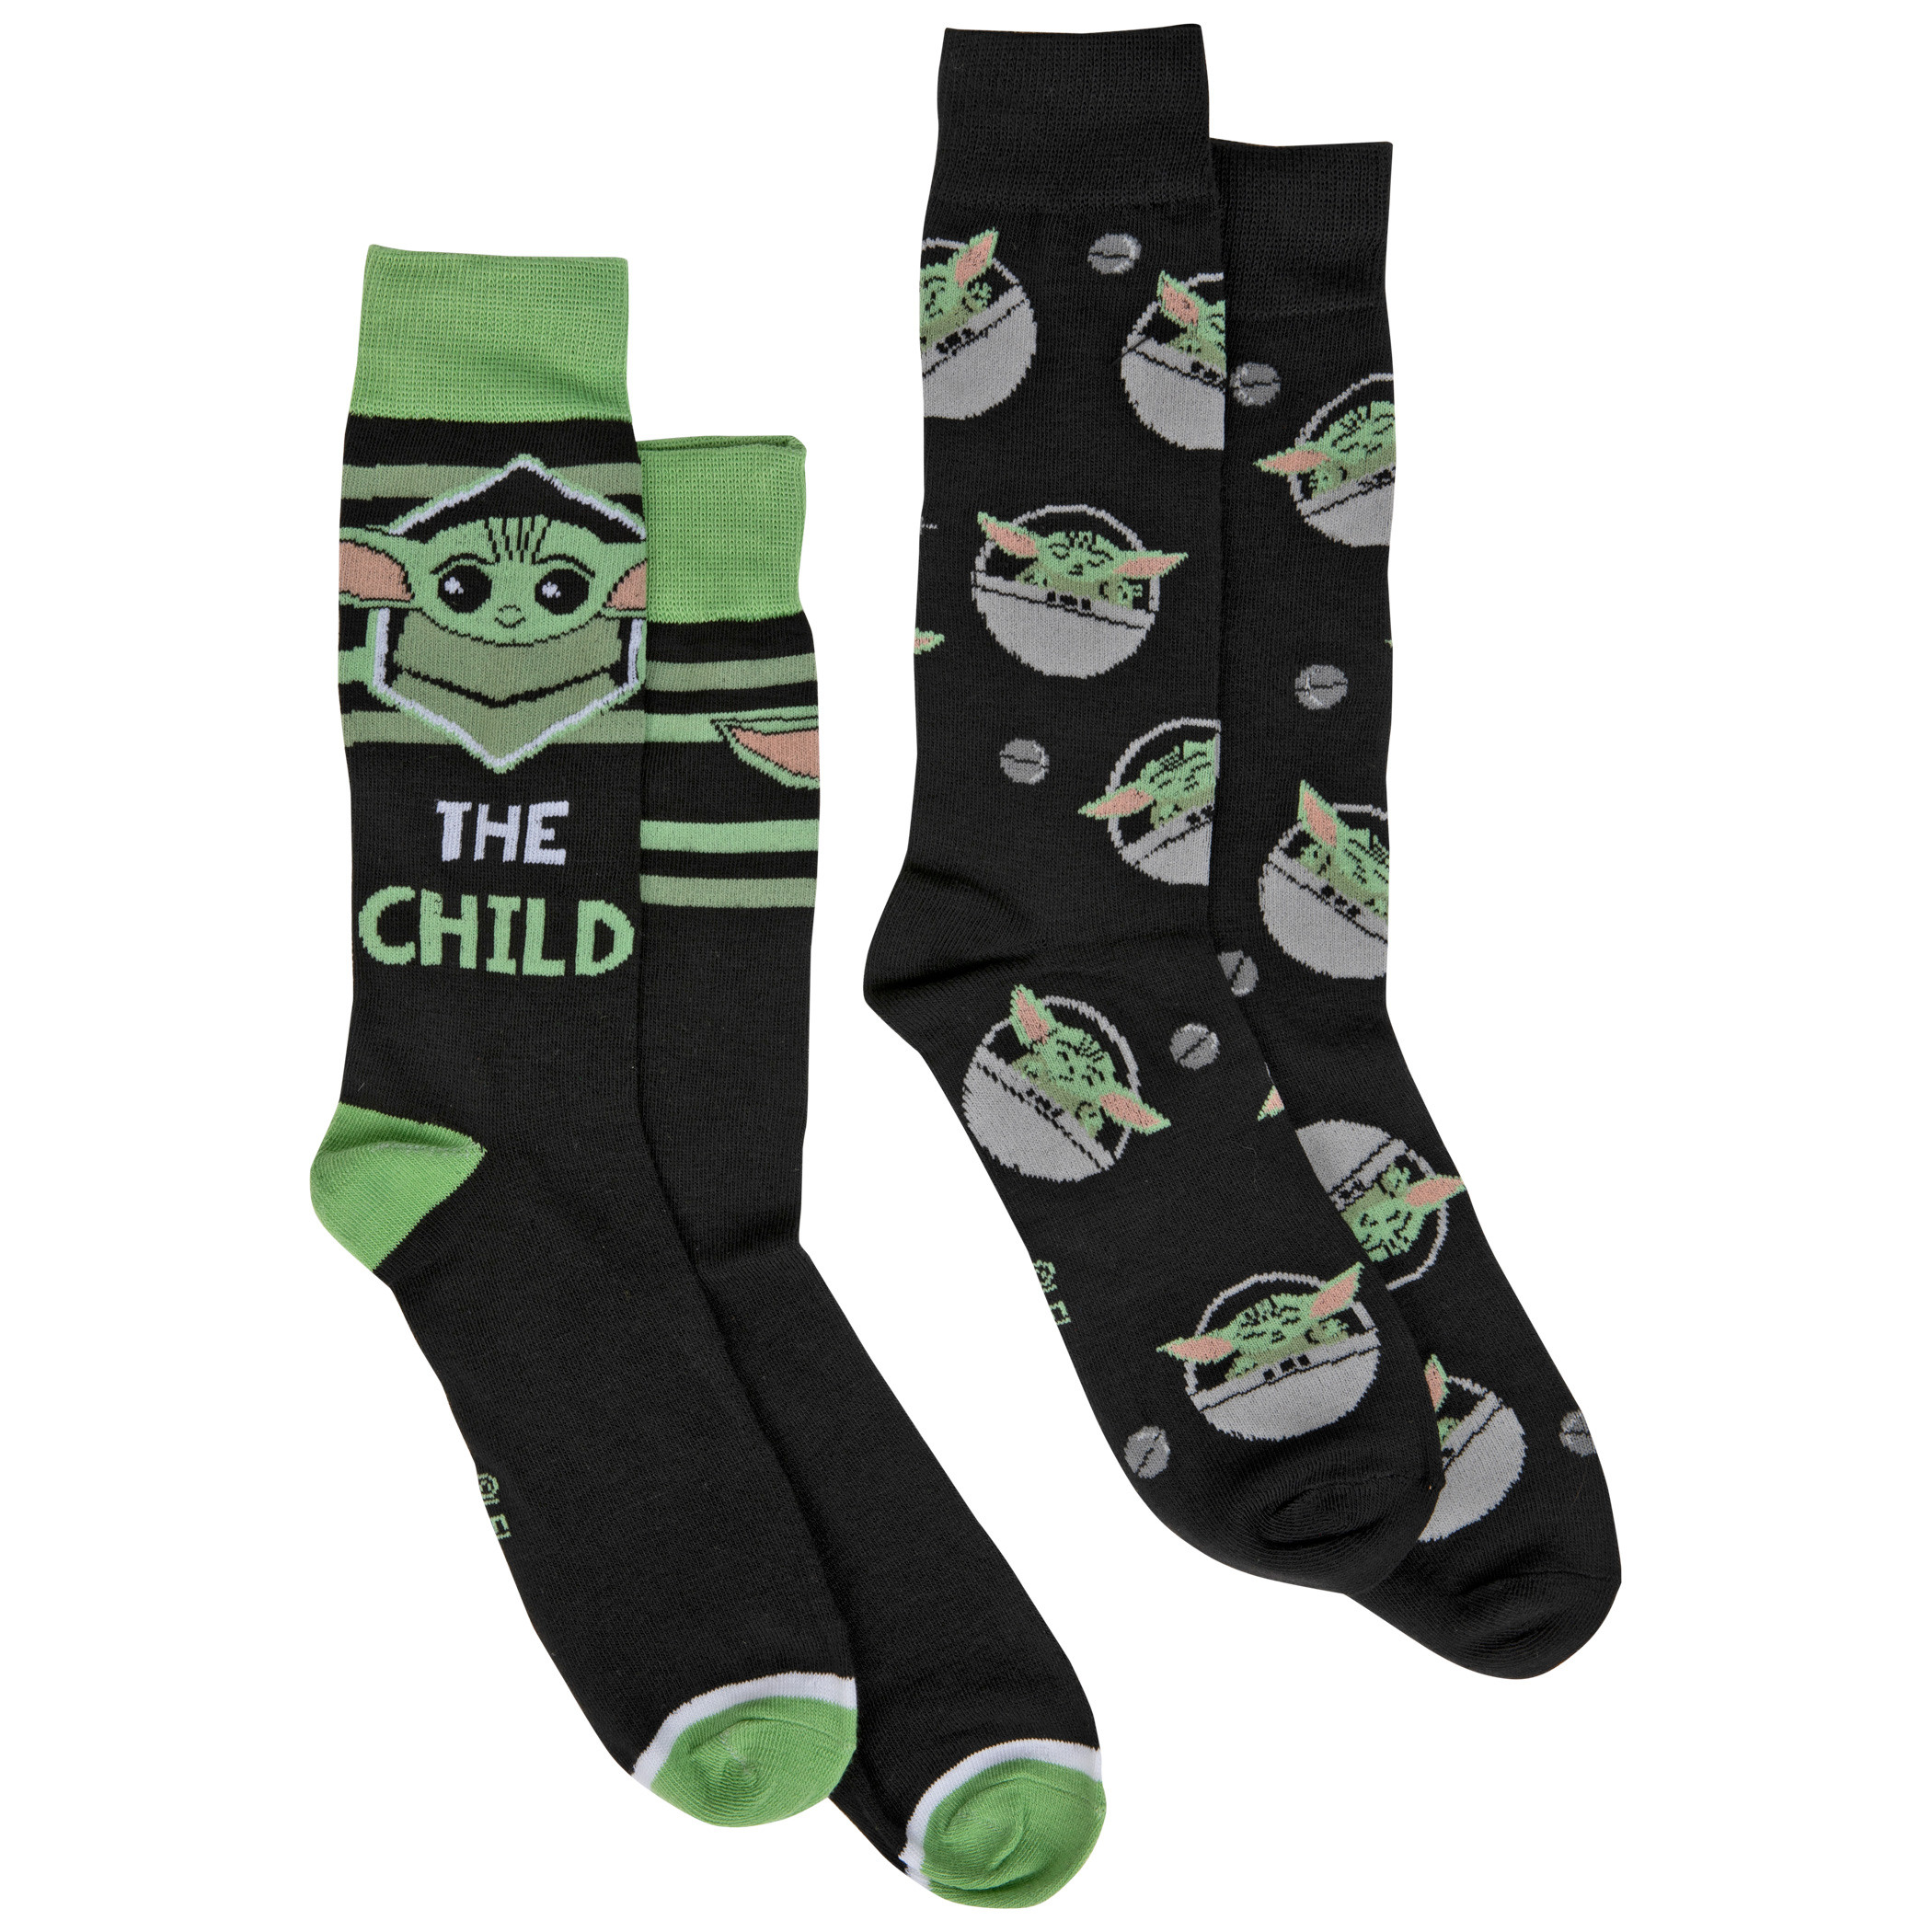 The Mandalorian Grogu The Child 2-Pair Pack of Crew Socks